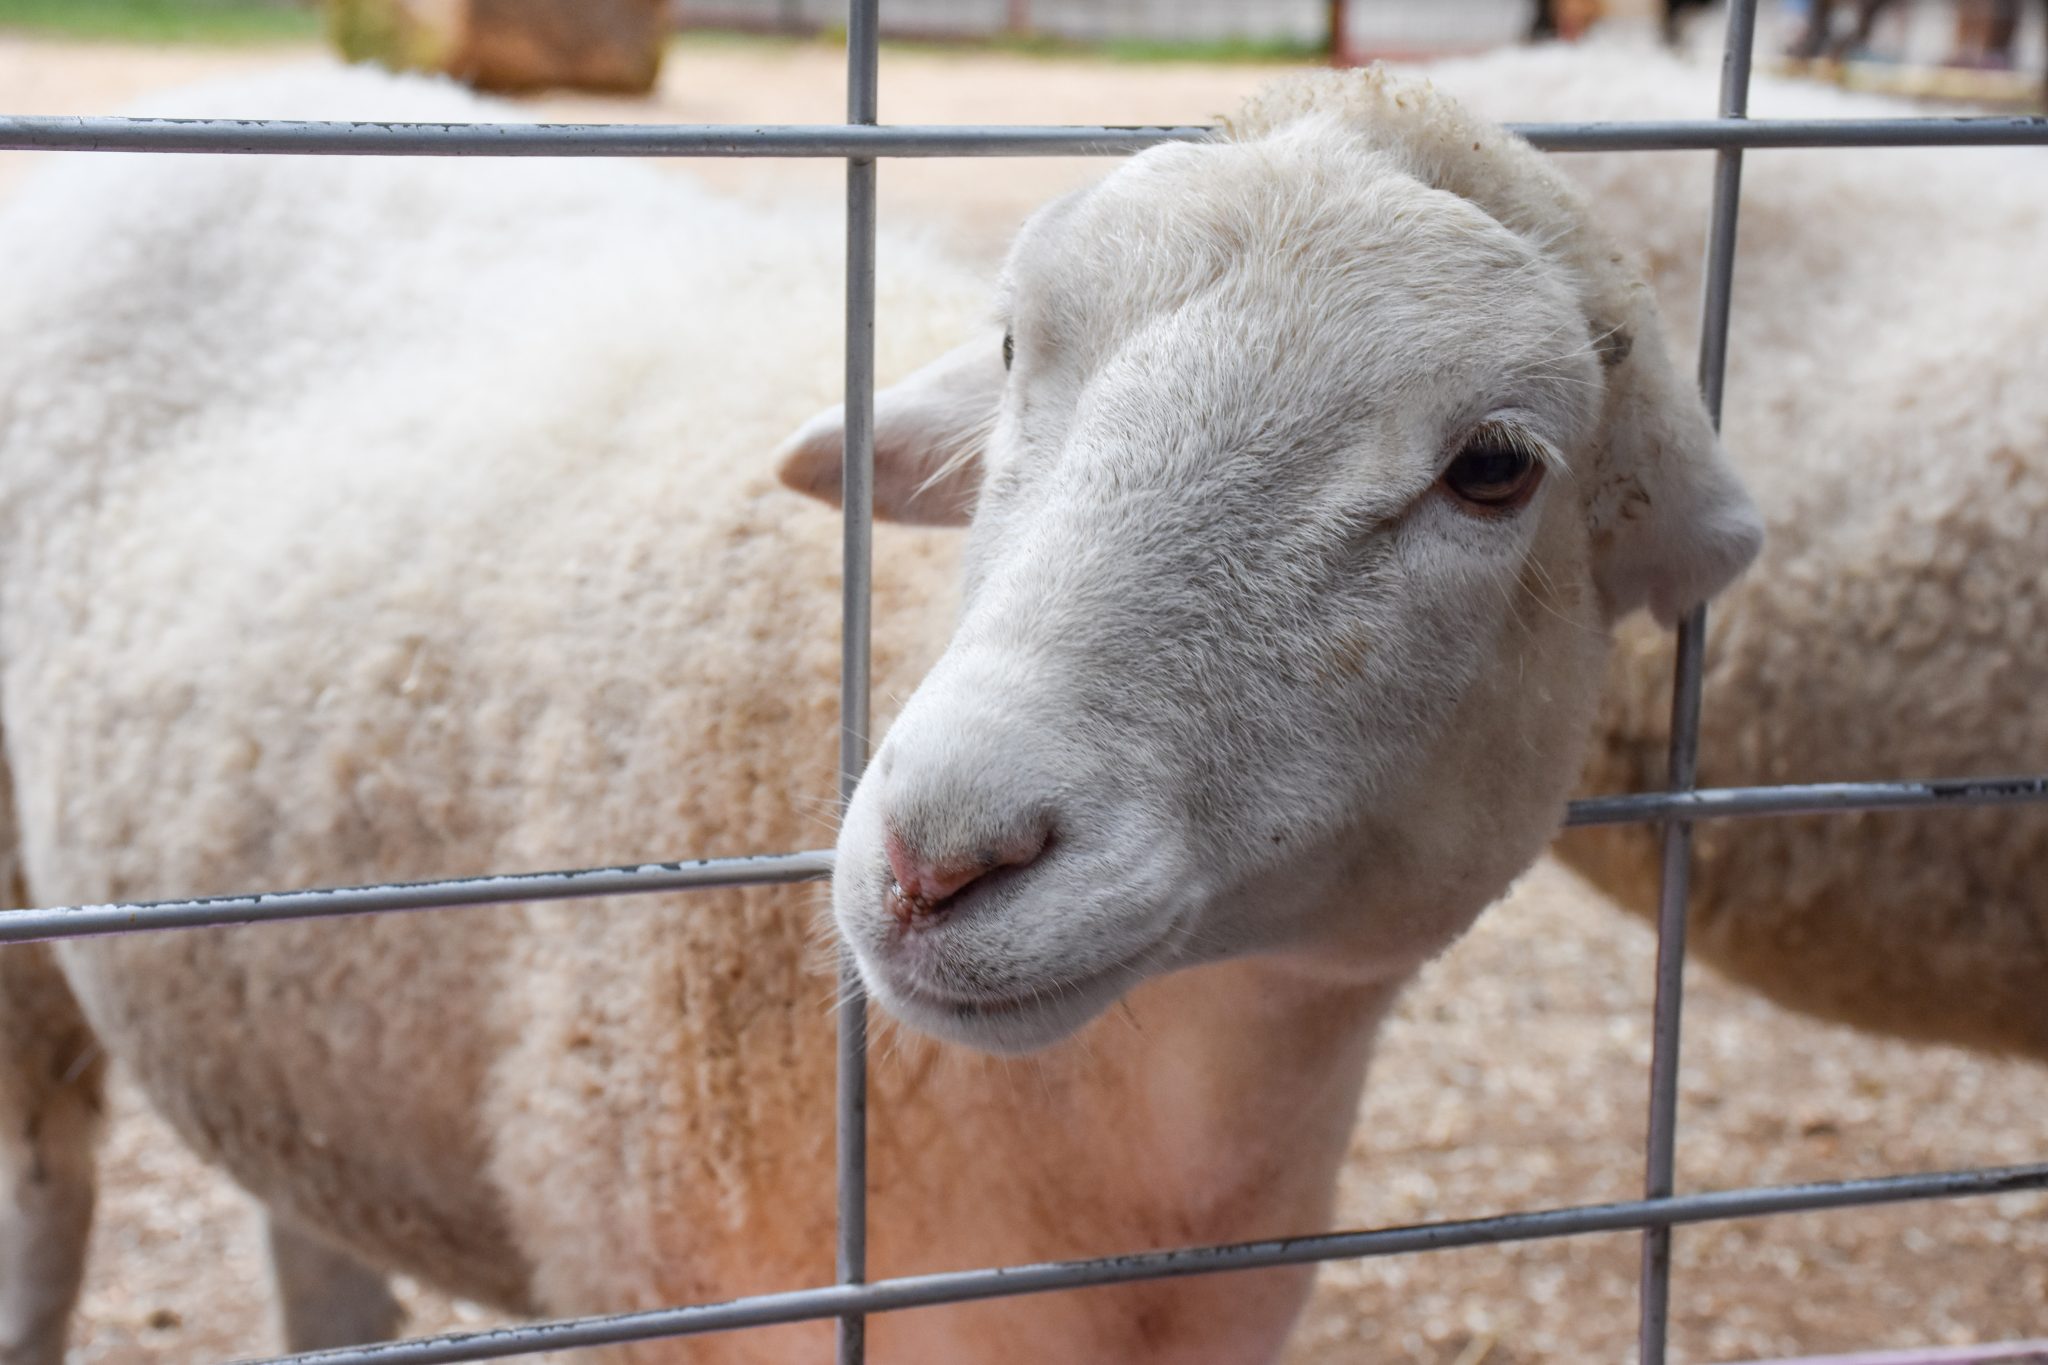 Sheep poking its head through a fence